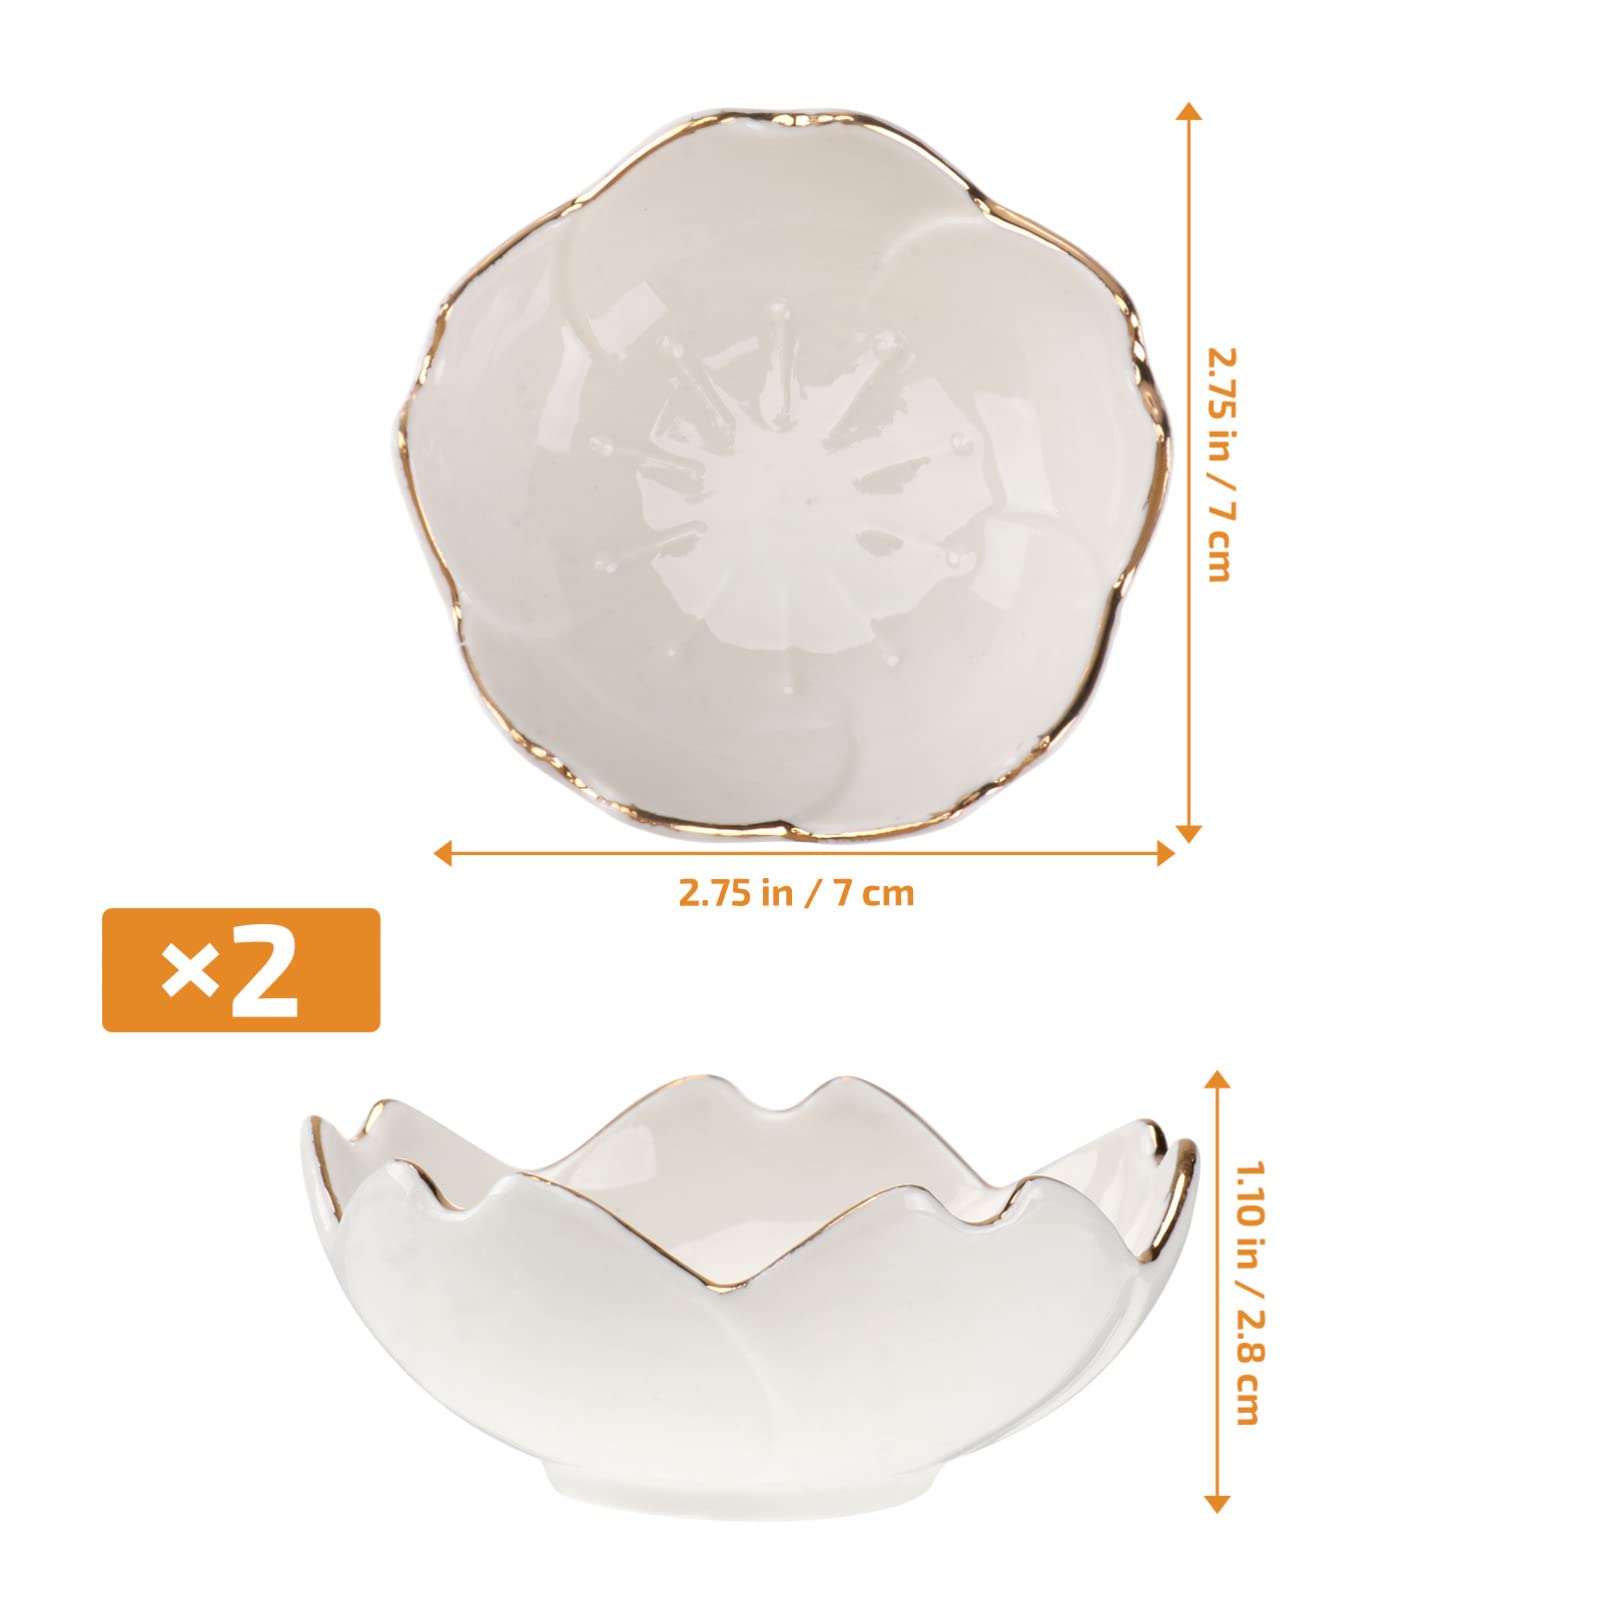 Luxshiny Ceramic Sauce Bowl Bowl Pinch Bowls 2pcs Ceramic Bowl, Gold Rim Bowls Flower Appetizer Plates Dipping Bowls for Home Kitchen (White) Sushi Soy Sauce Dish Japanese Decor